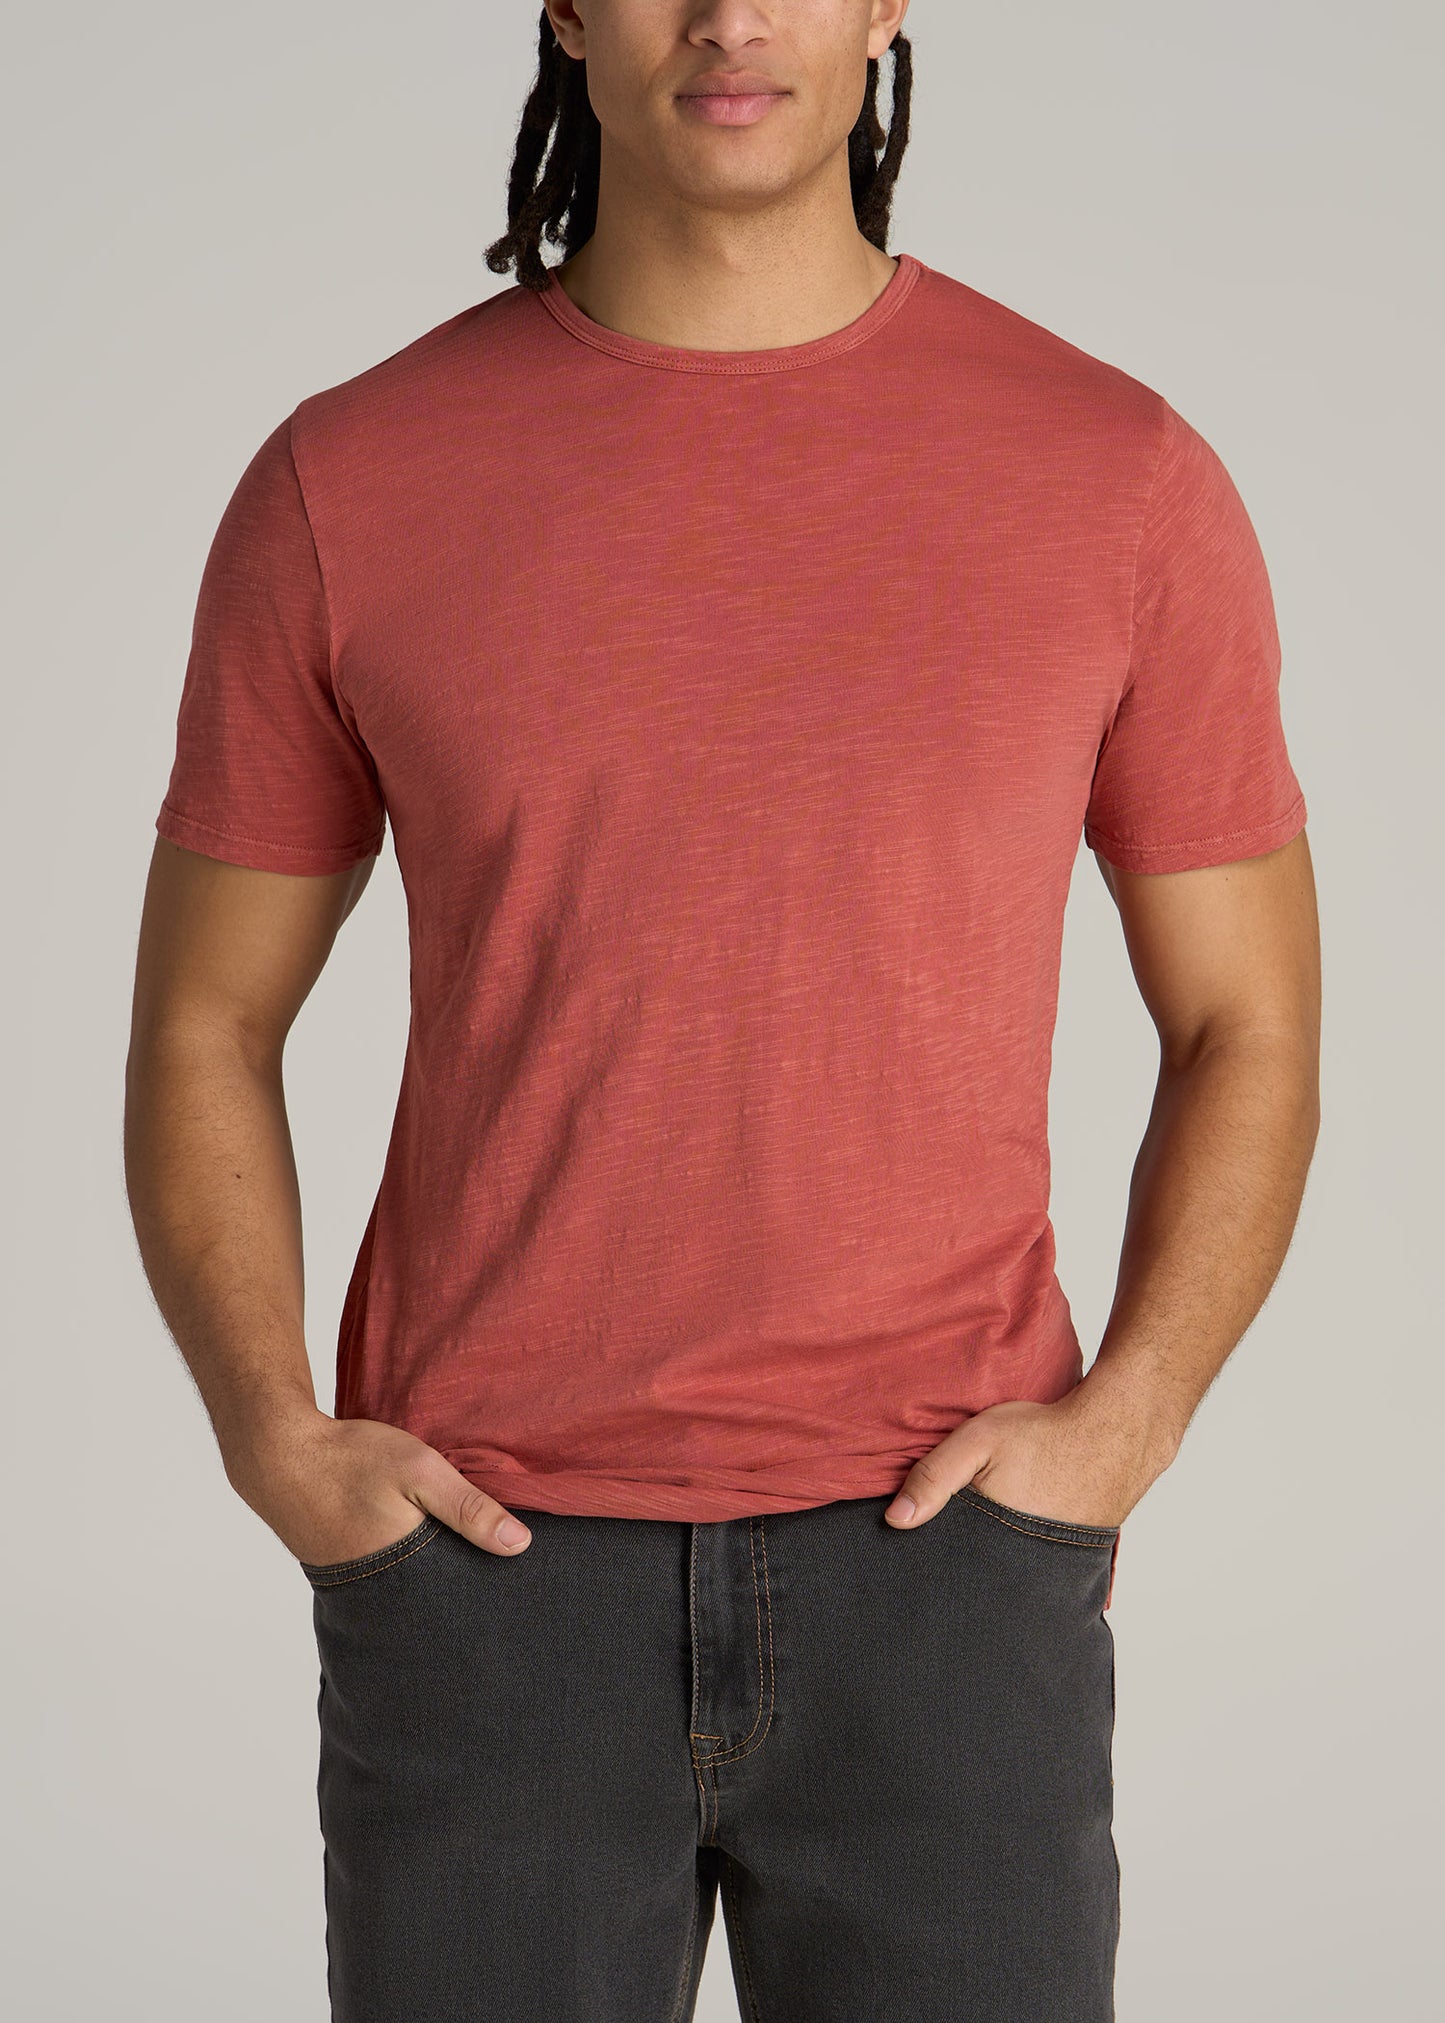 Slub Tee in Persimmon - Tall Men's Shirts